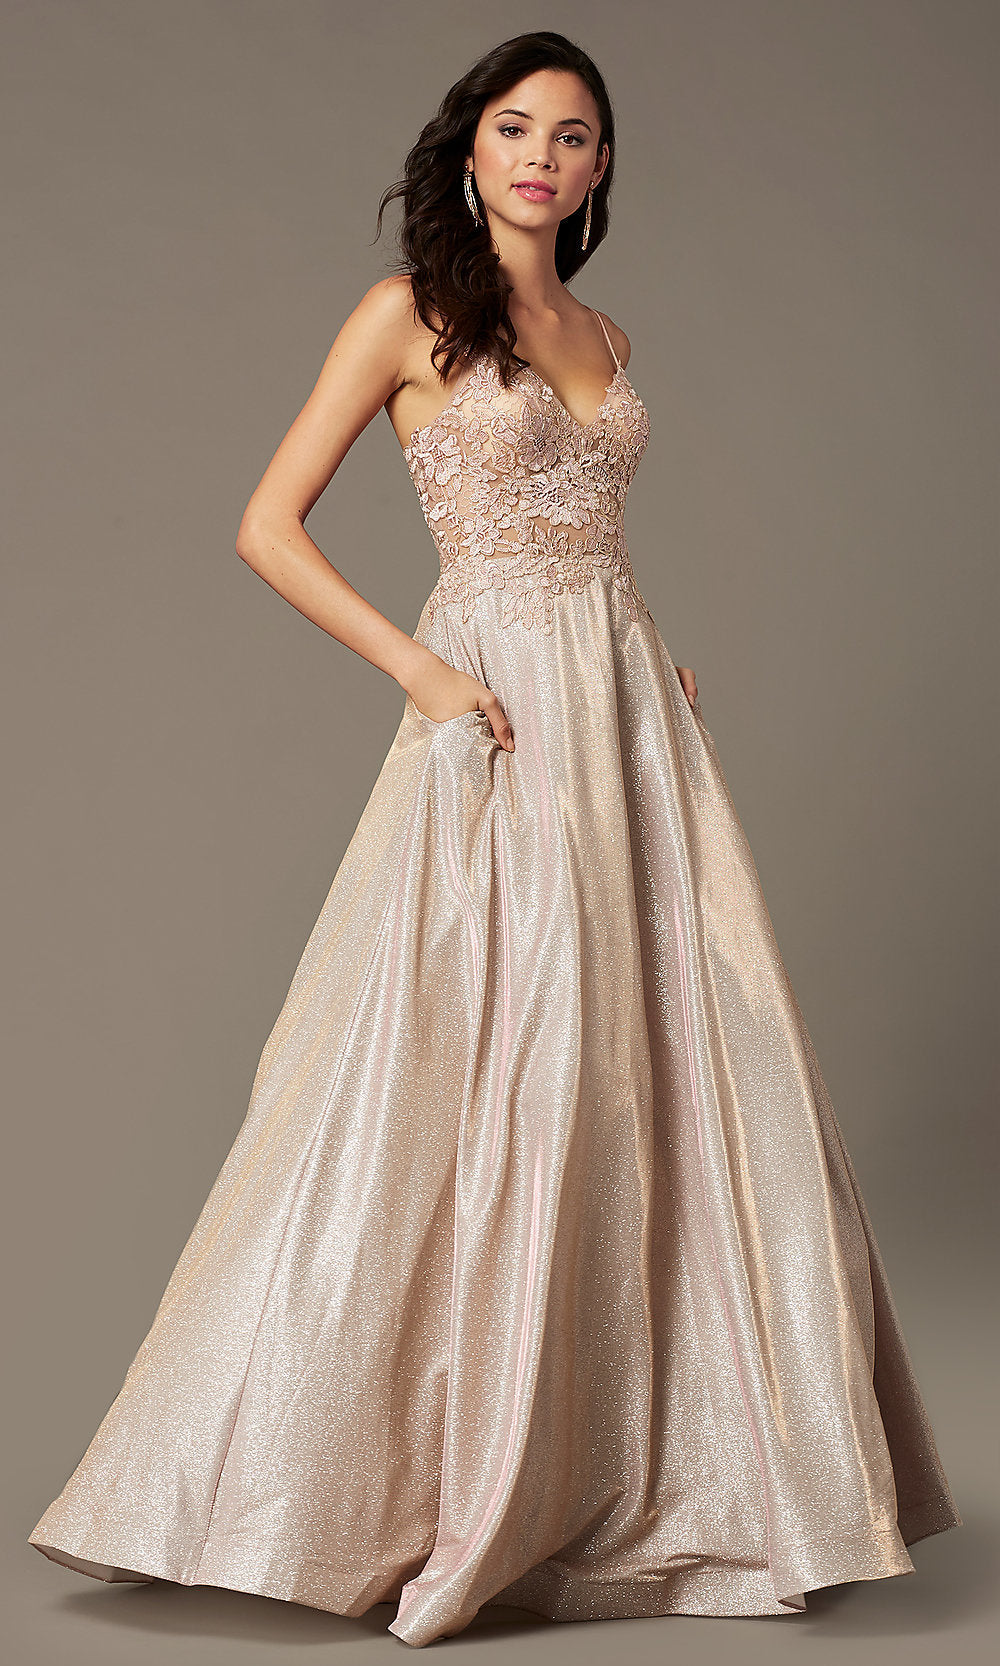 Metallic Blush Glitter-Knit Lace-Bodice Prom Dress by PromGirl